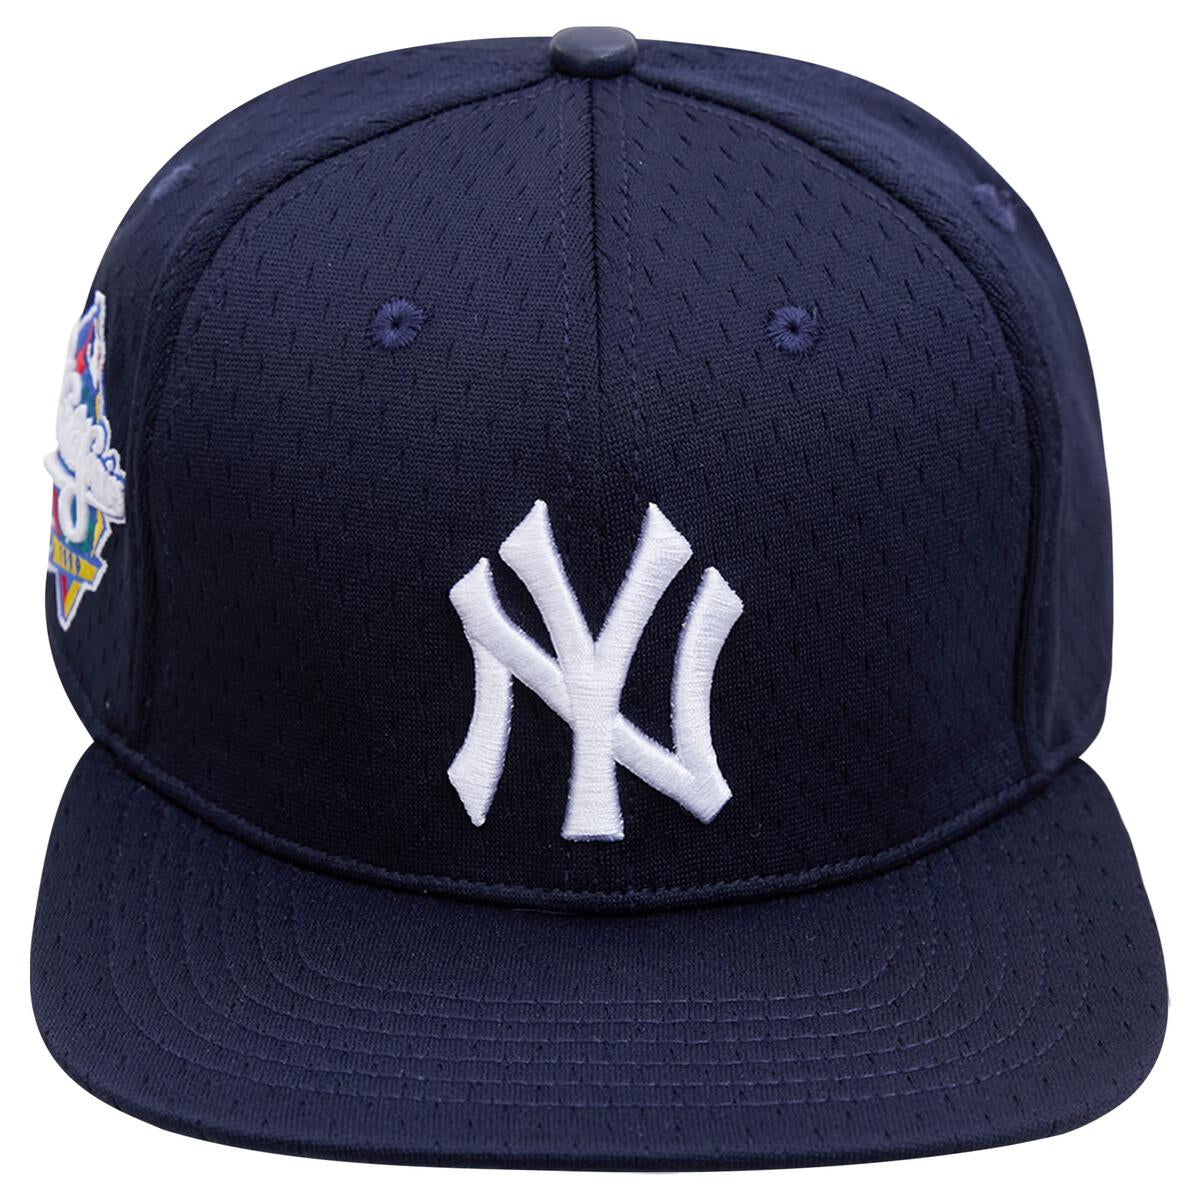 PRO STANDARD - New York Yankees Mesh Snapback